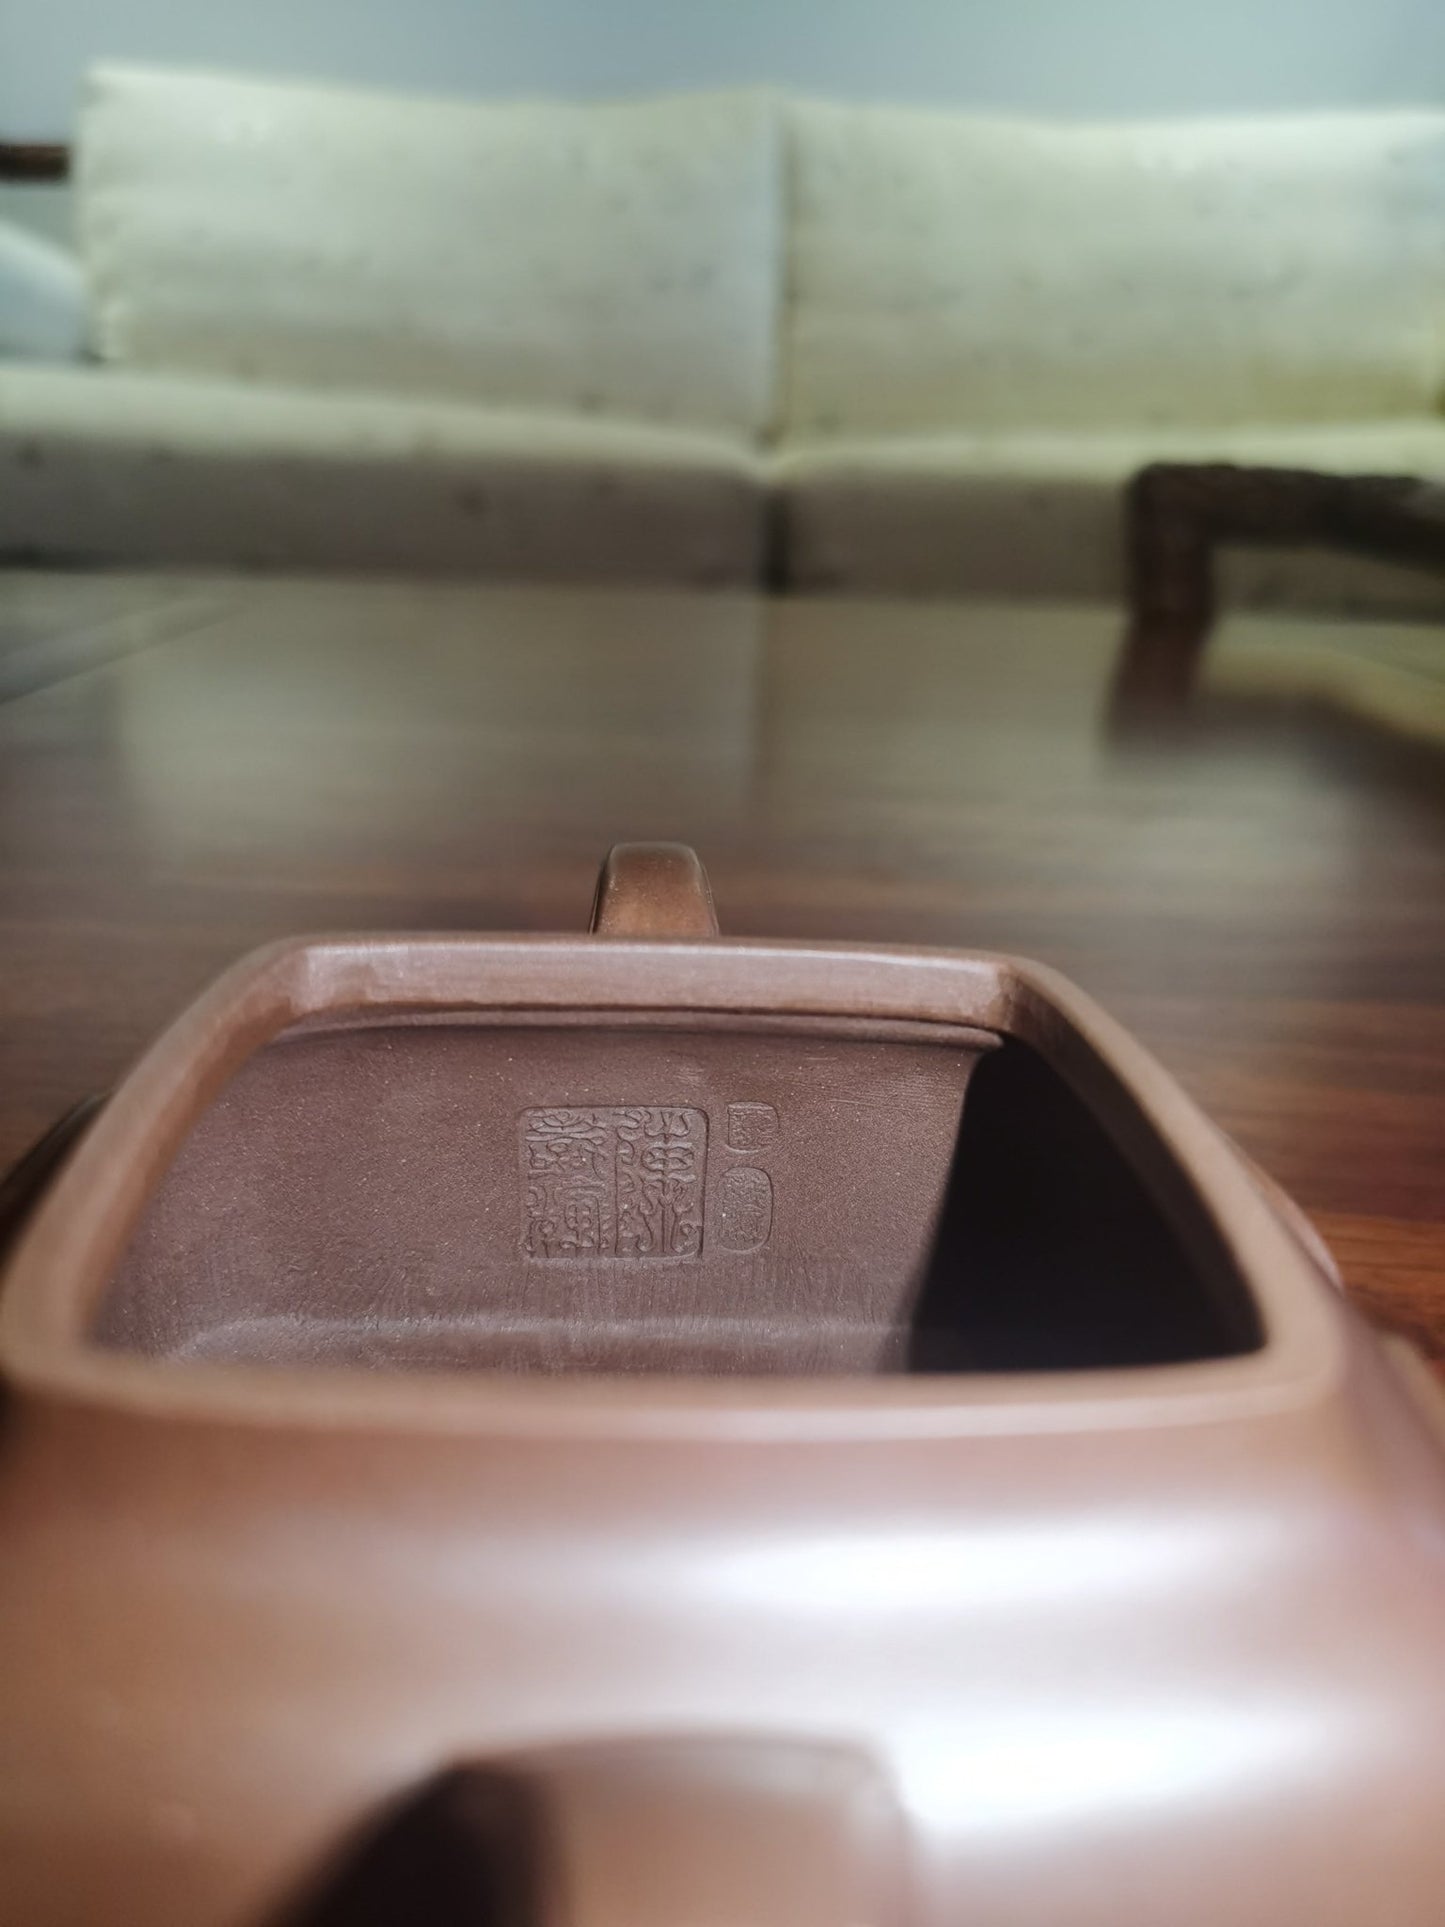 Siyutao Teapot,bronze Square青铜四方,authentic yixing zisha DiCaoQing,excellent clay,220ml,full handmade & aged 42 years - SiYuTao Teapot